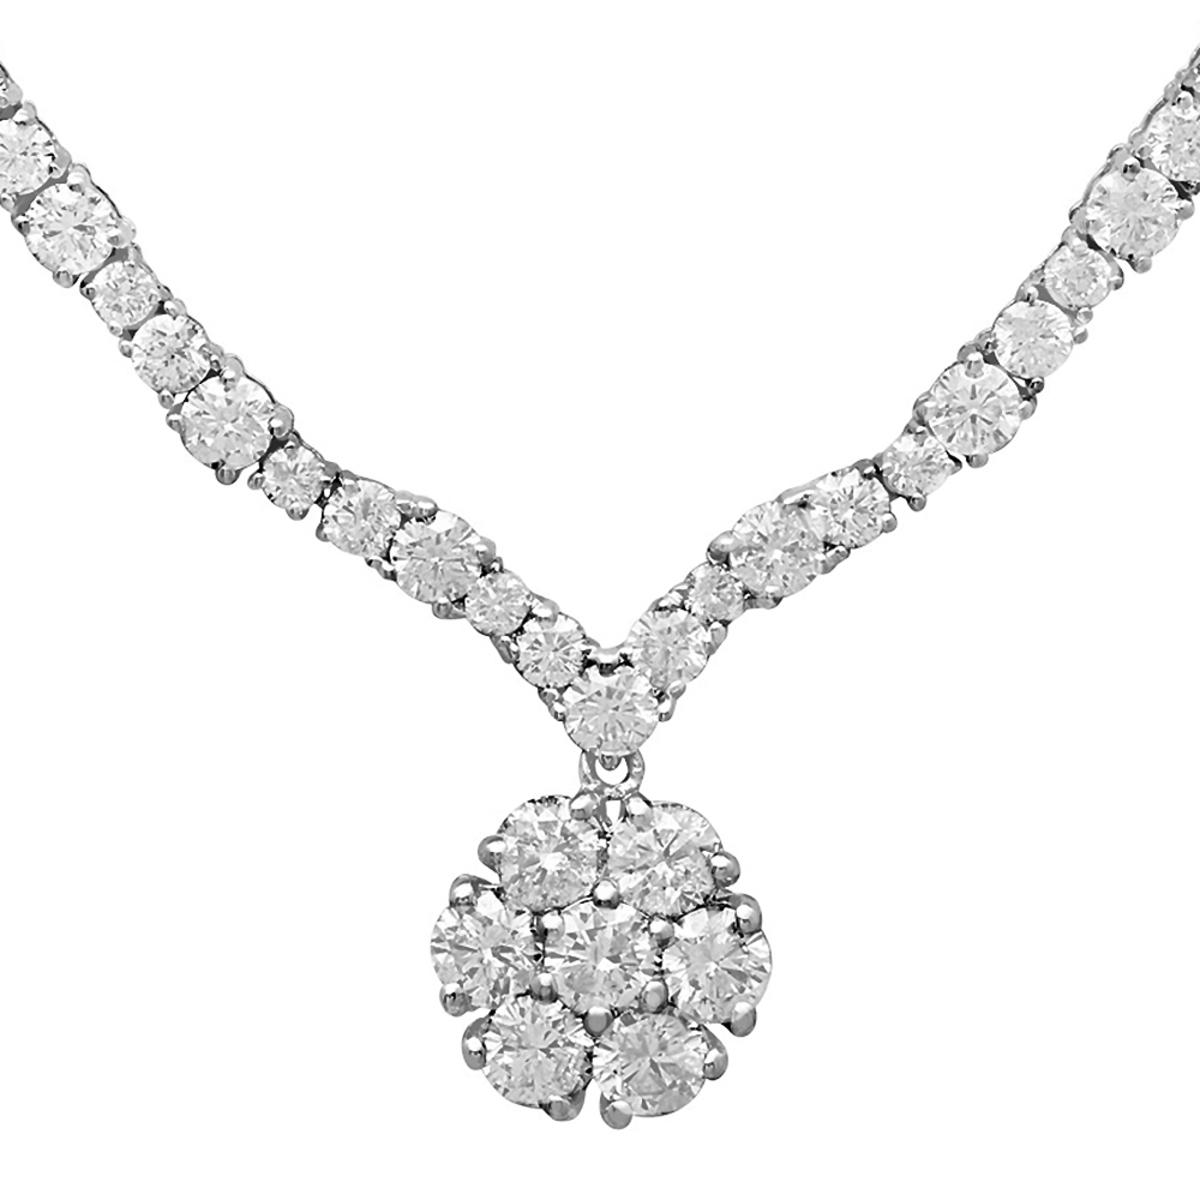 14k White Gold 15.81ct Diamond Necklace